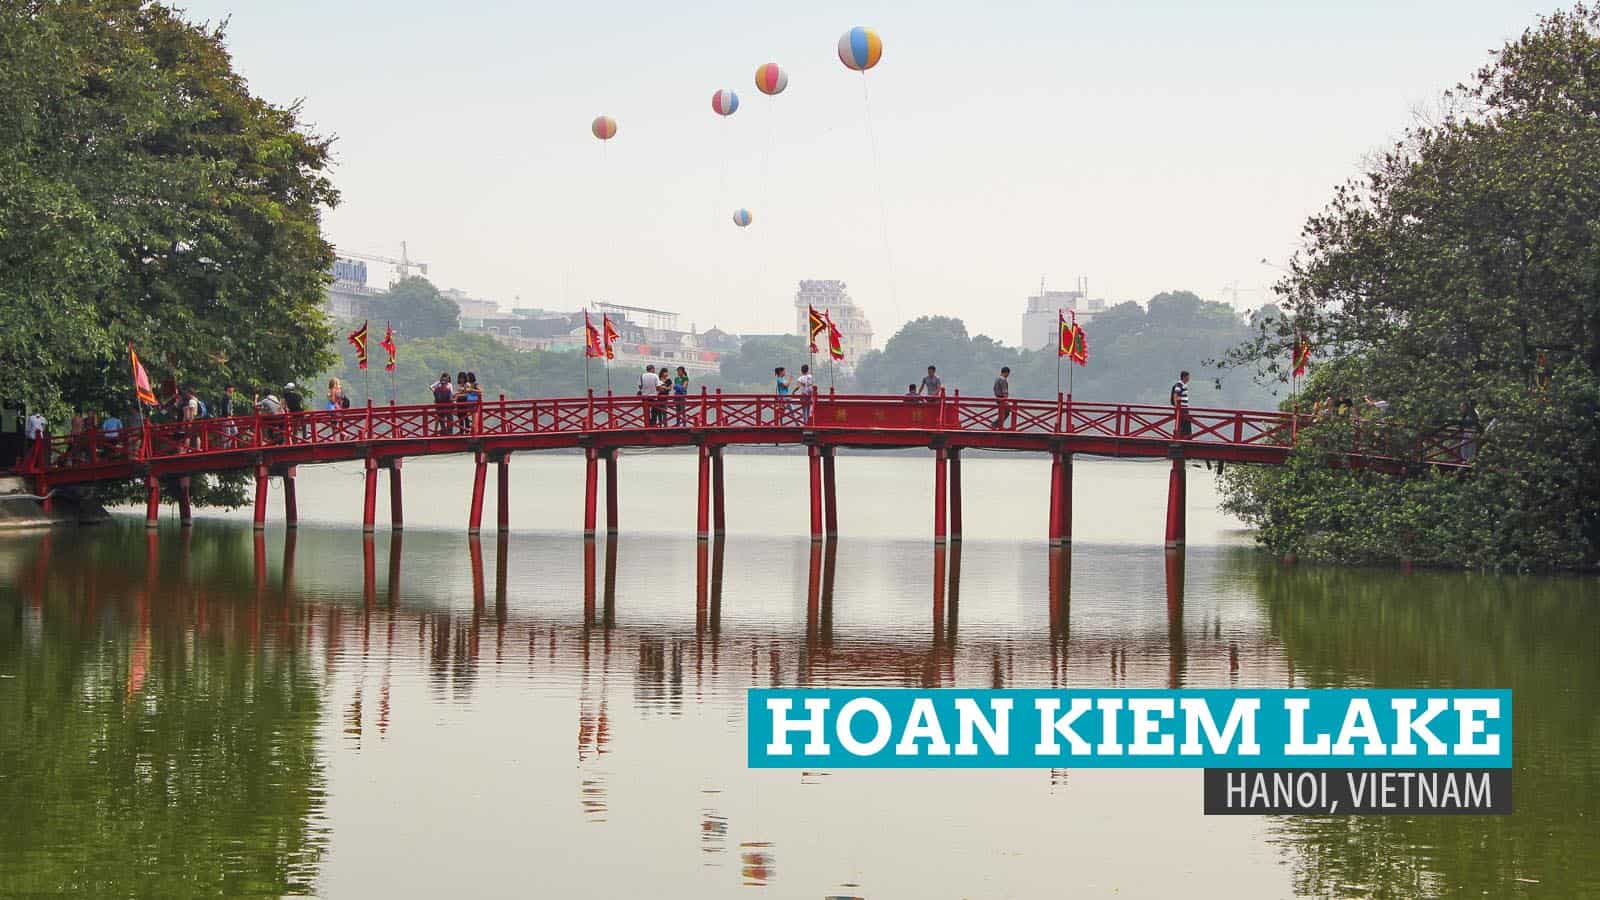 Hoan Kiem Lake: The Legend of the Restored Sword of Hanoi, Vietnam | The Poor Traveler Itinerary Blog